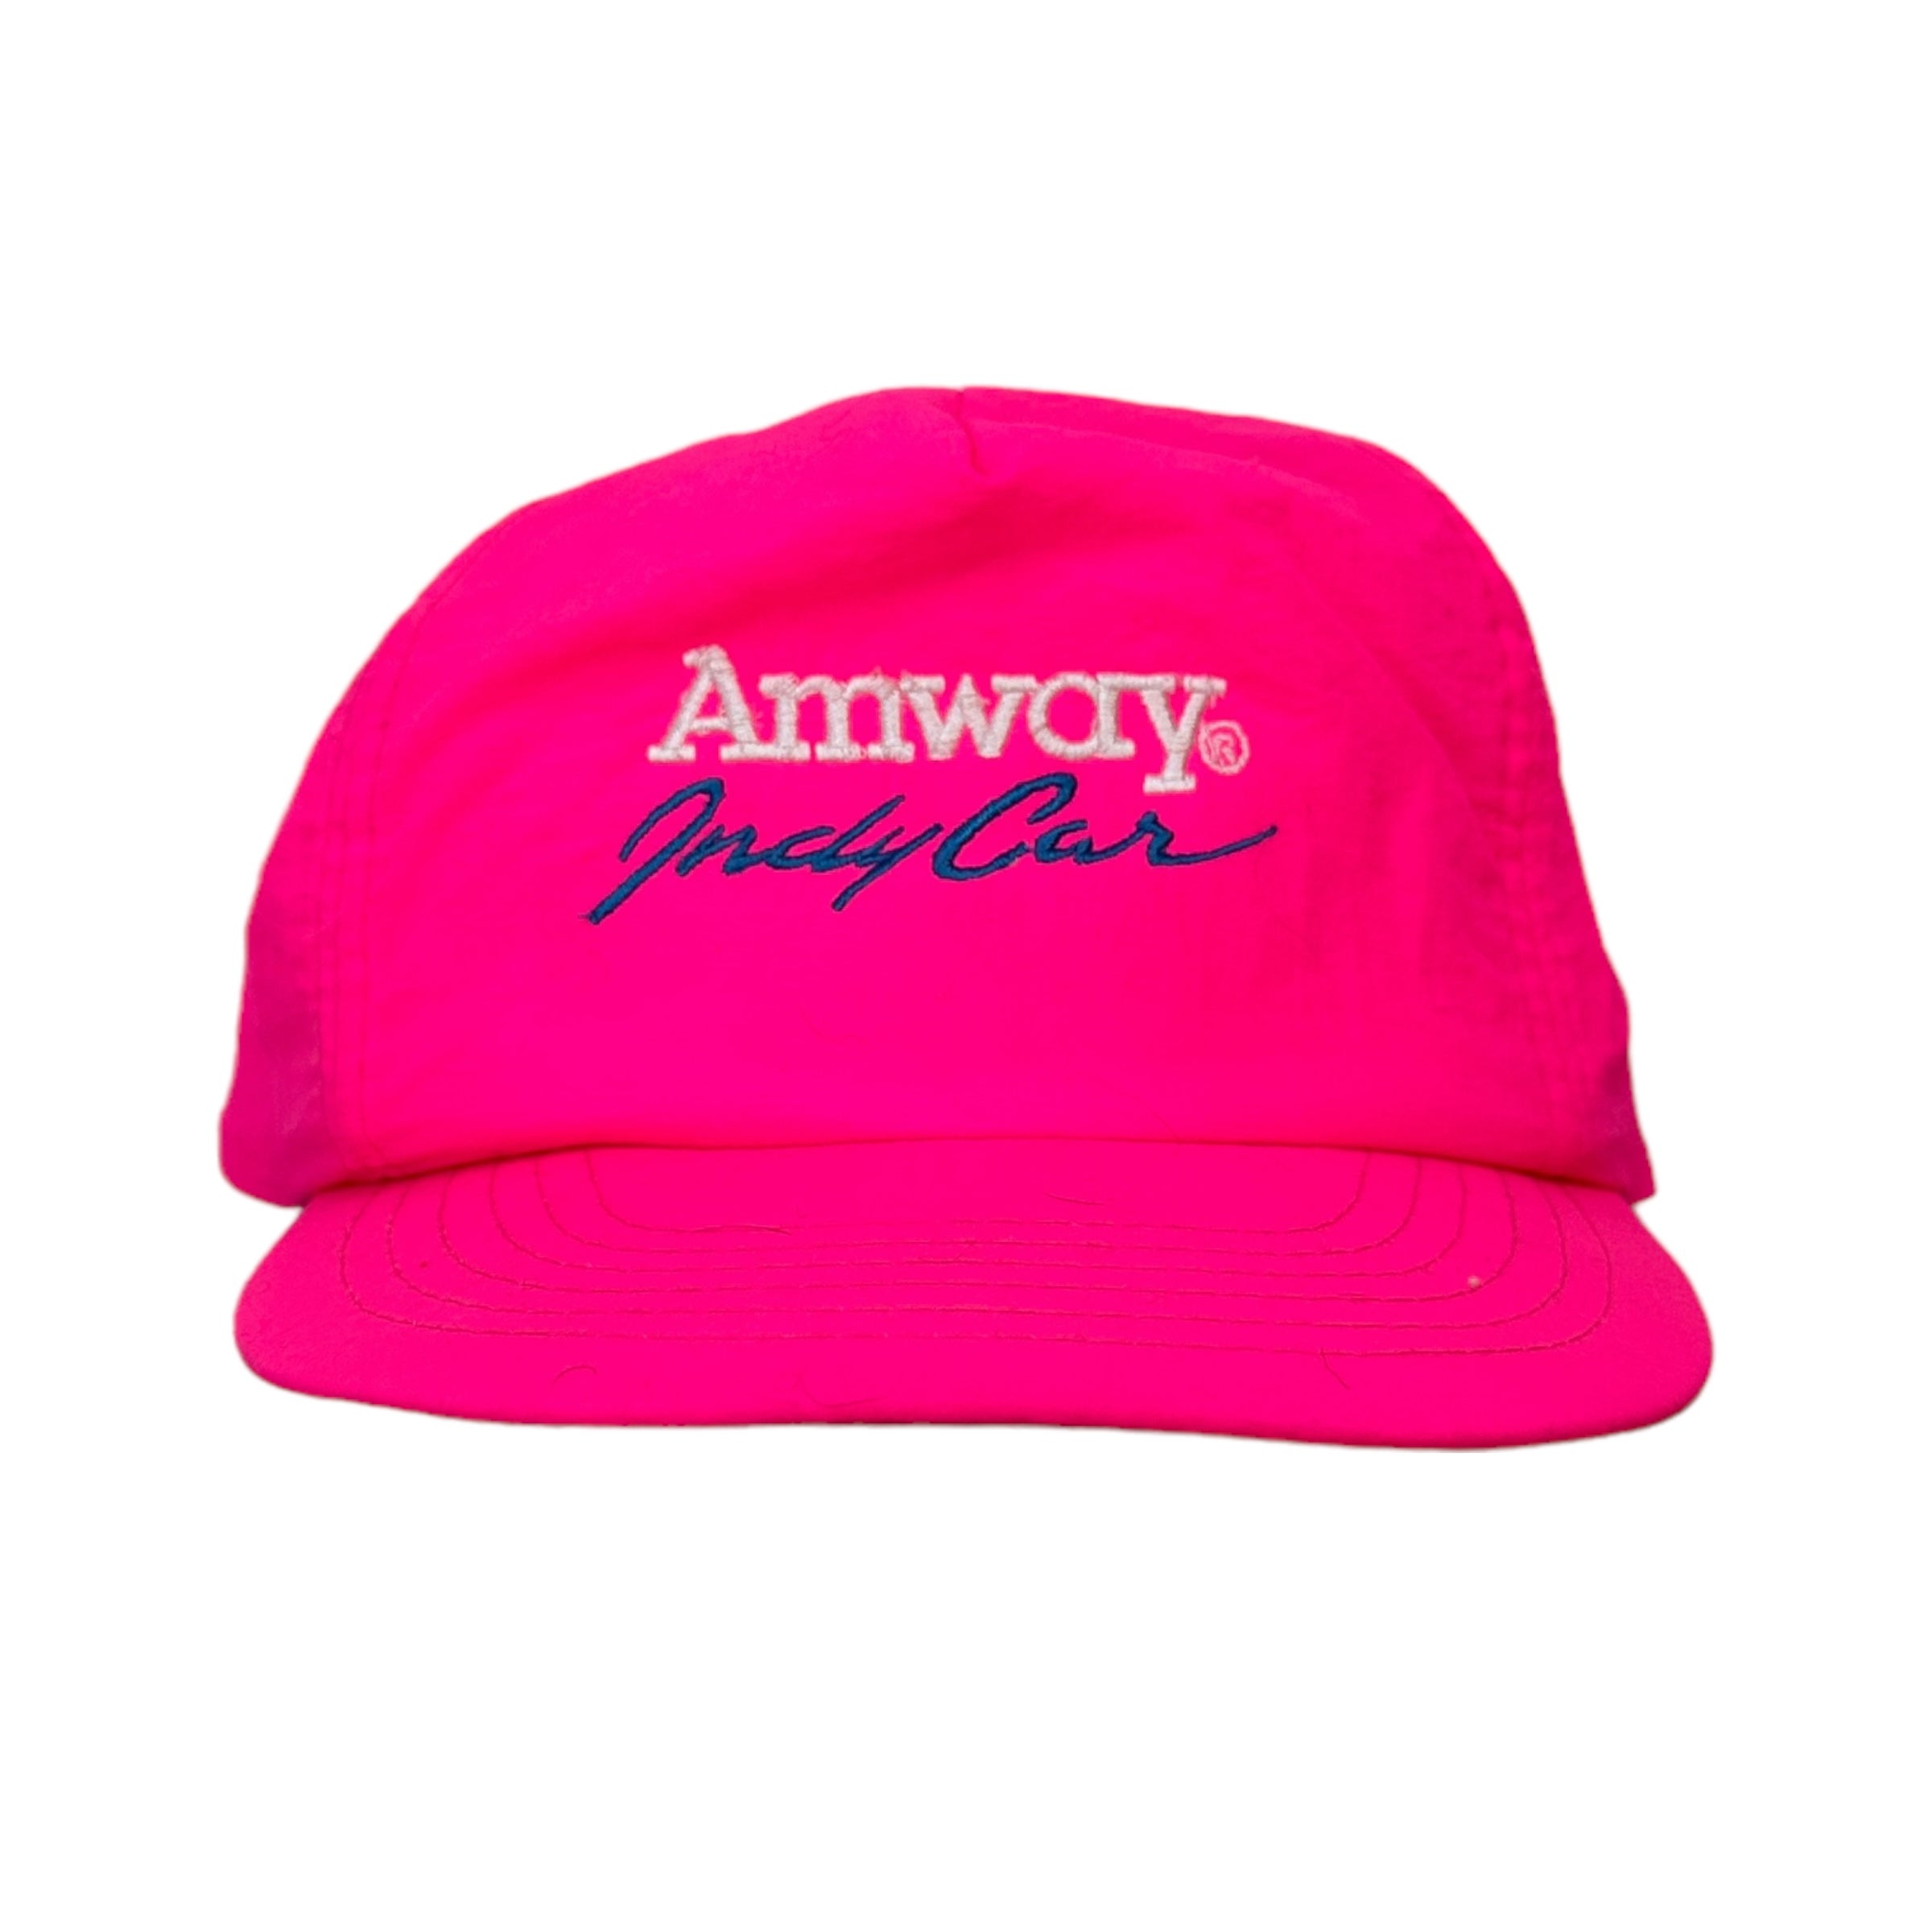 Vintage Amway Indy Car Hat Pink